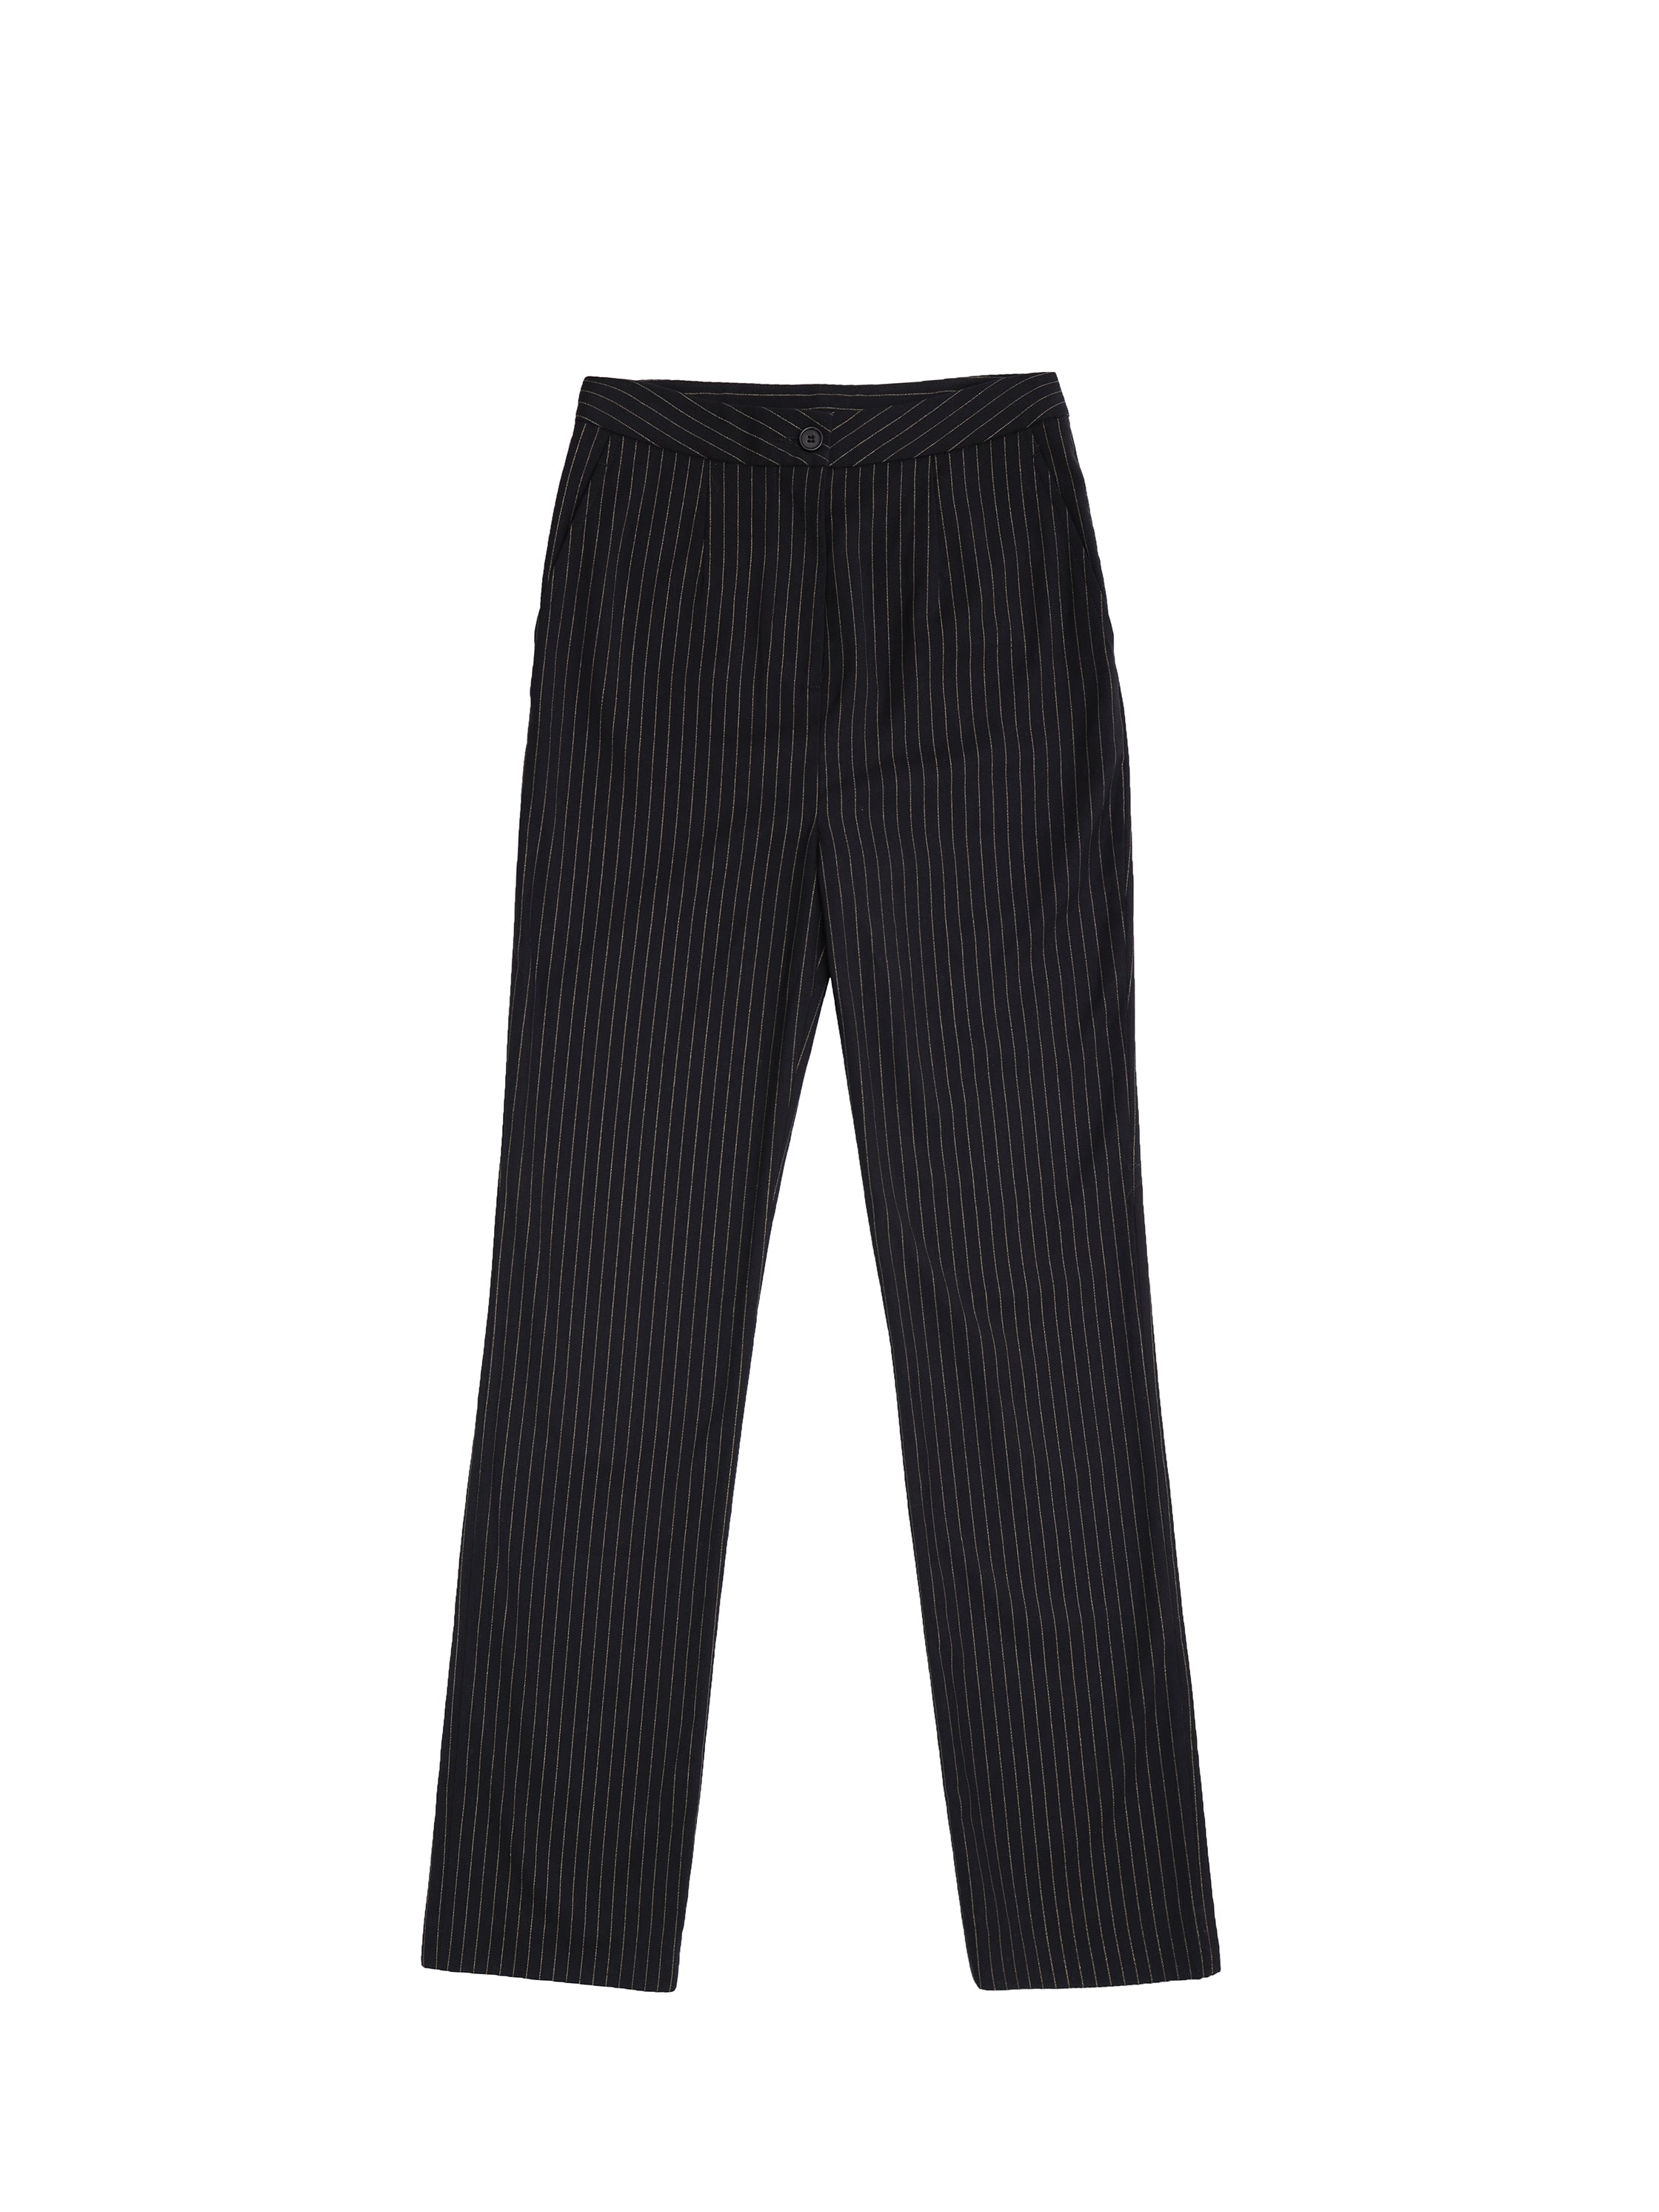 Black Pinstripes Trousers